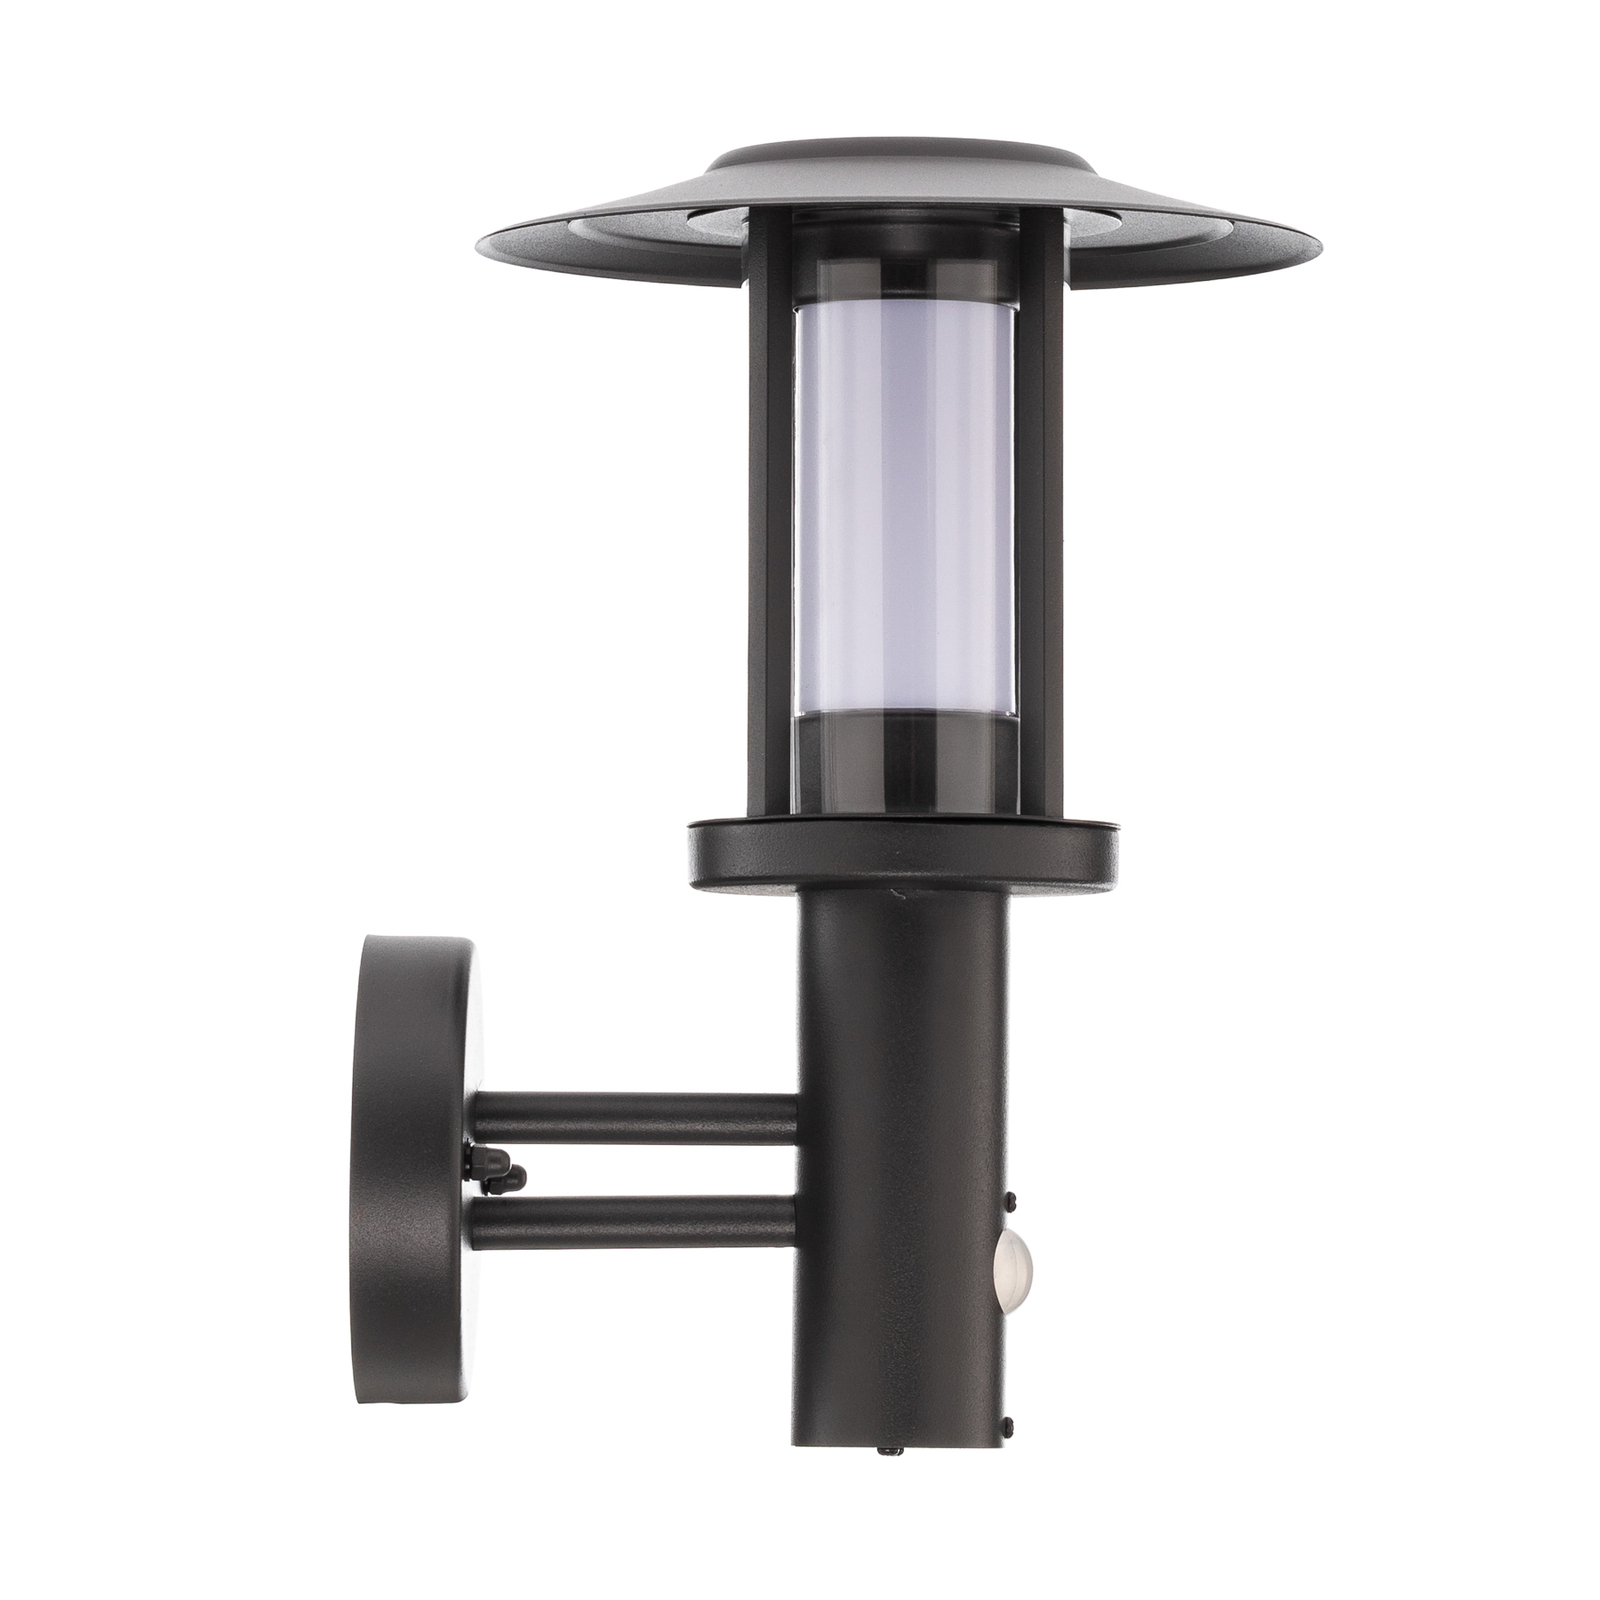 LED-Außenwandlampe Gregory, dunkelgrau, mit Sensor